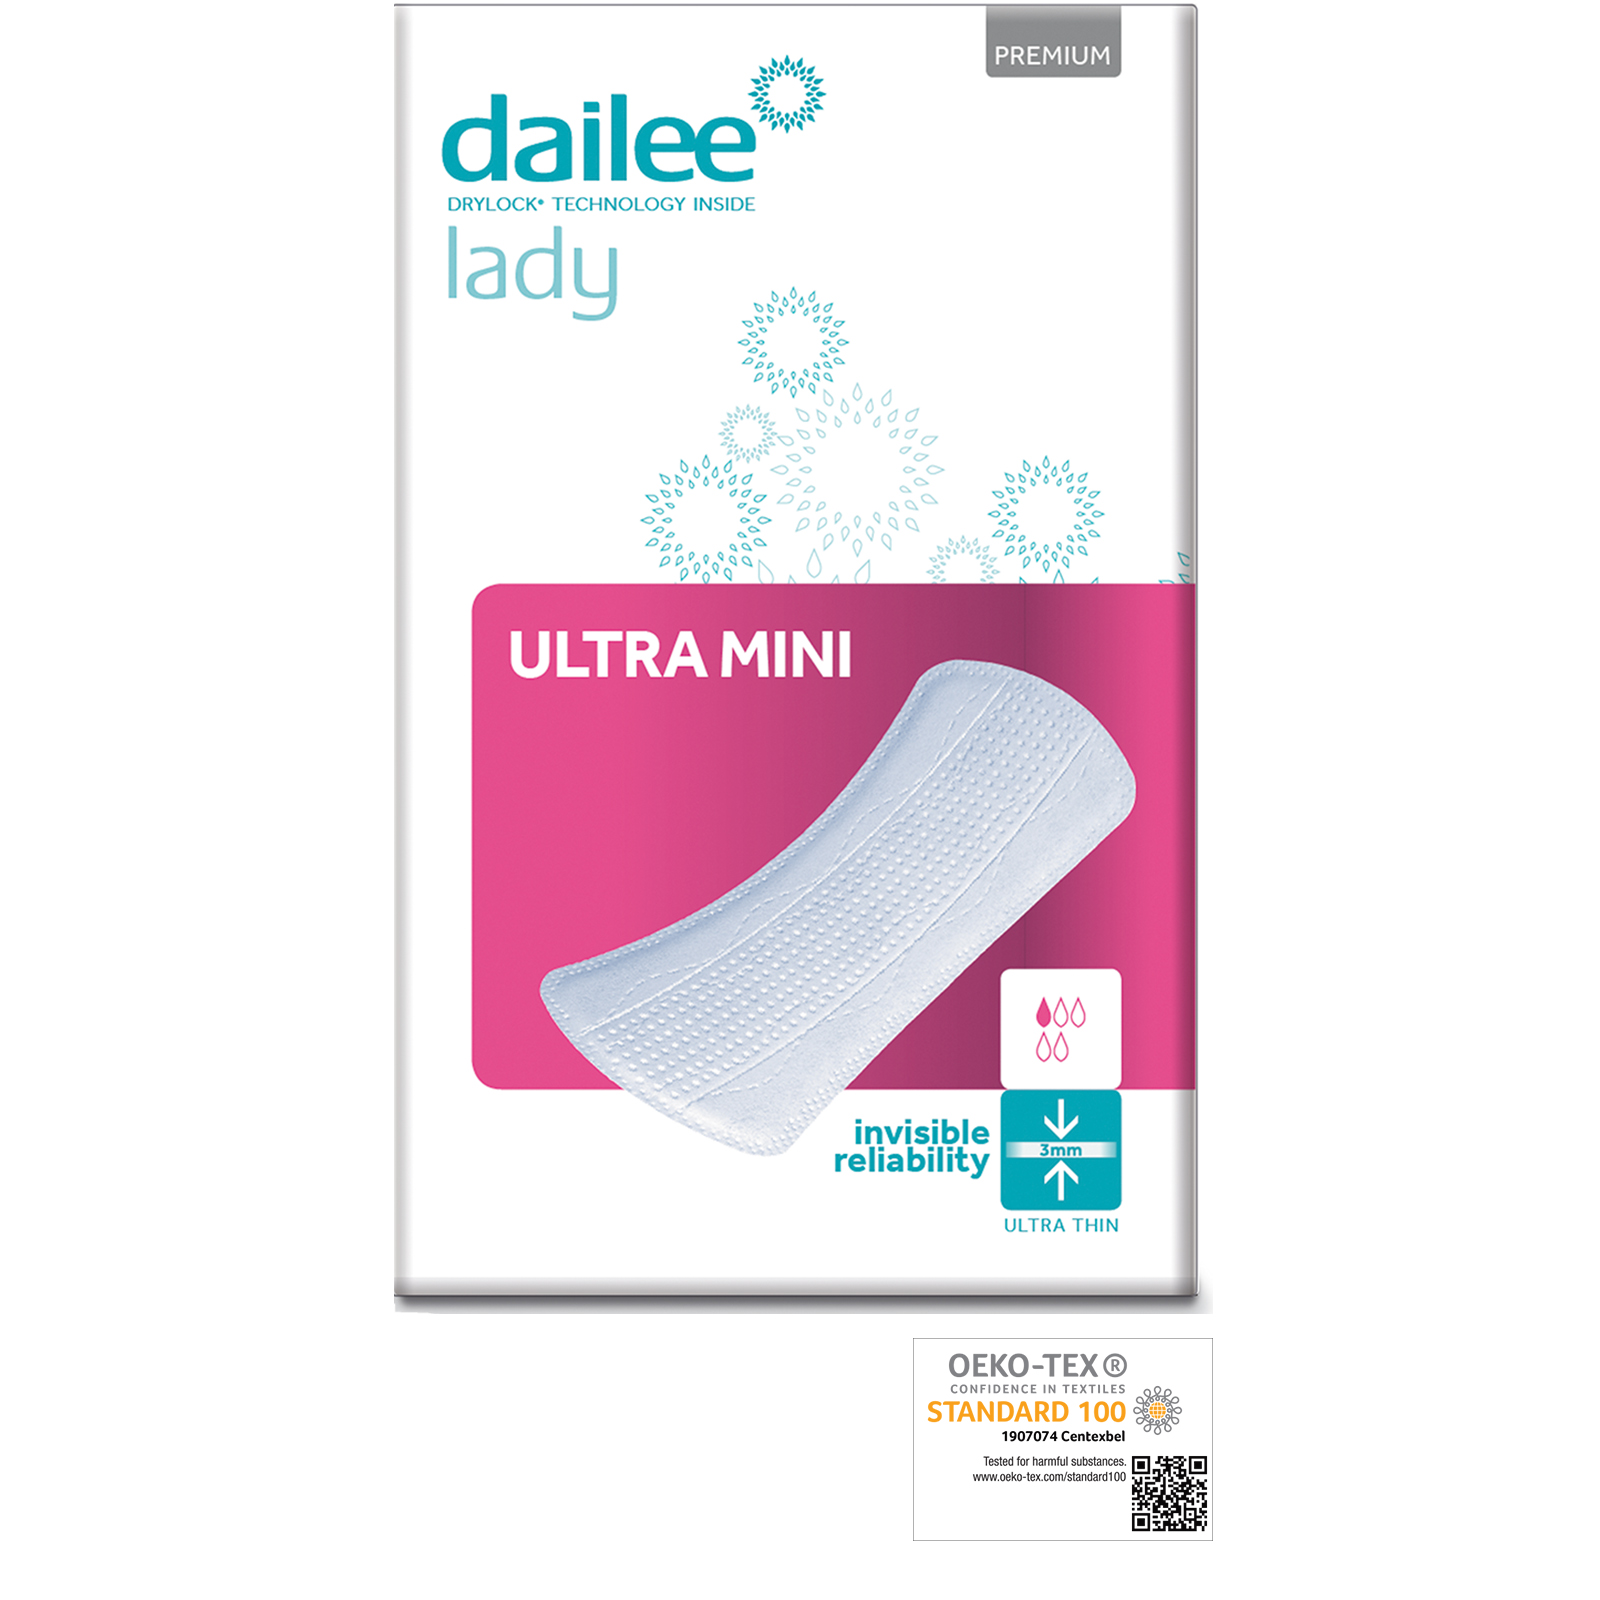 Dailee lady ultra mini logosmall